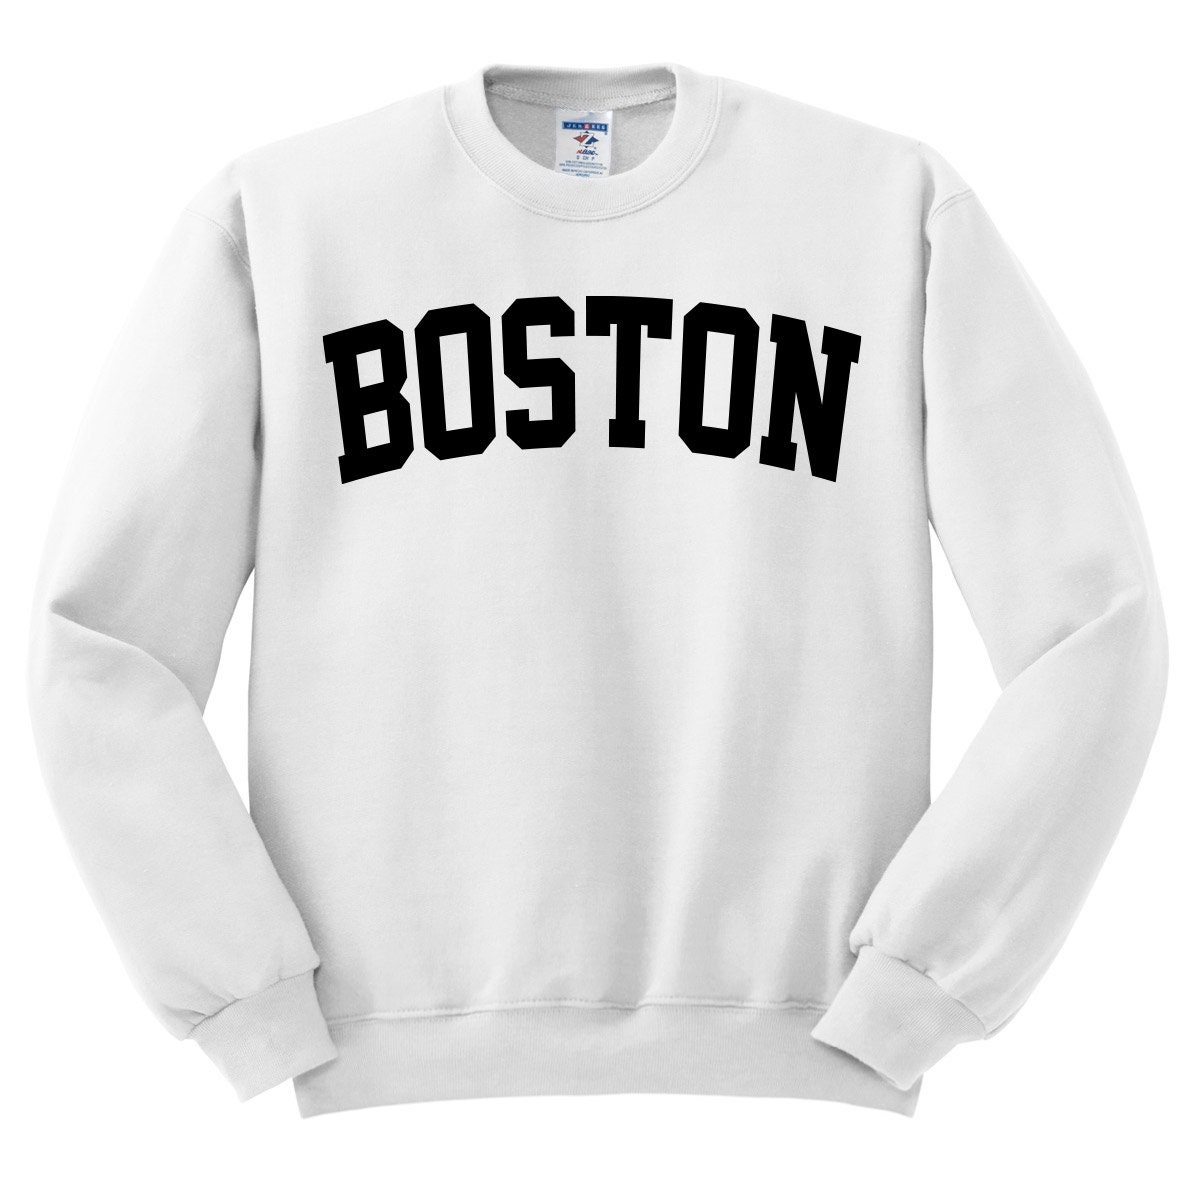 Boston Sweatshirt Collegiate Text Massachusetts Sweatshirt | Etsy